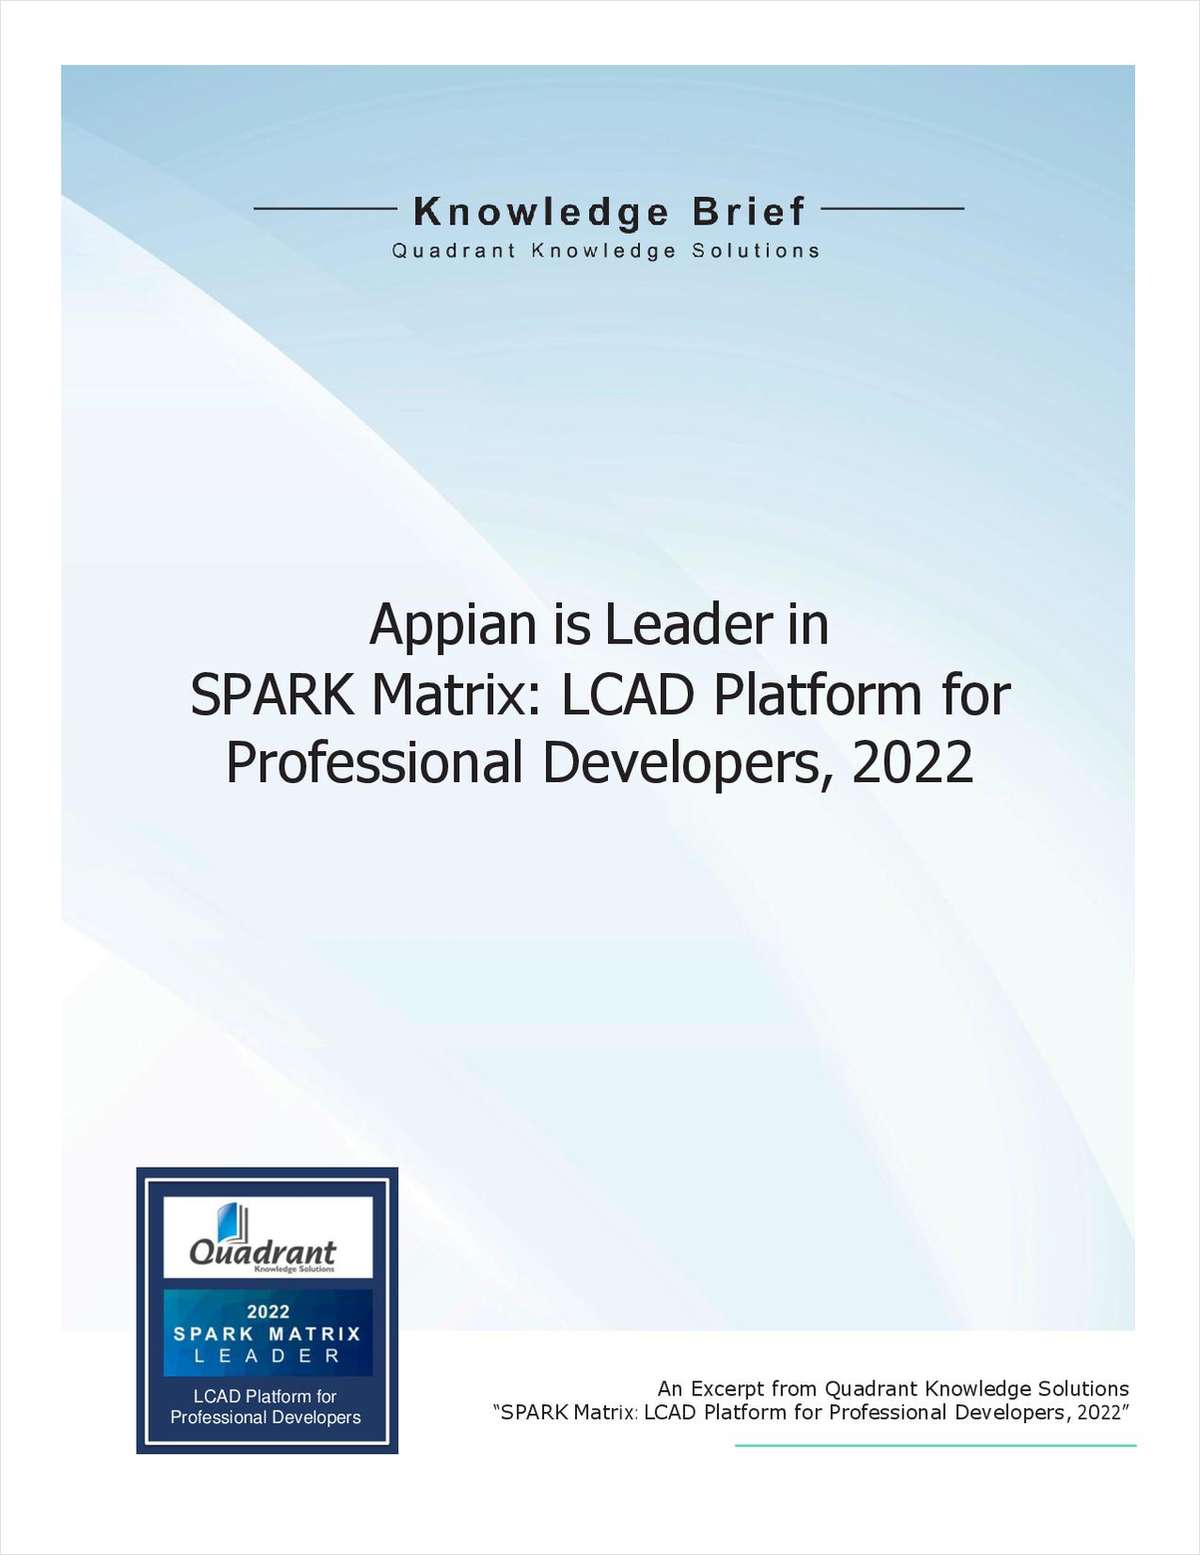 SPARK MATRIX: LCAD for Professional Developers, 2022